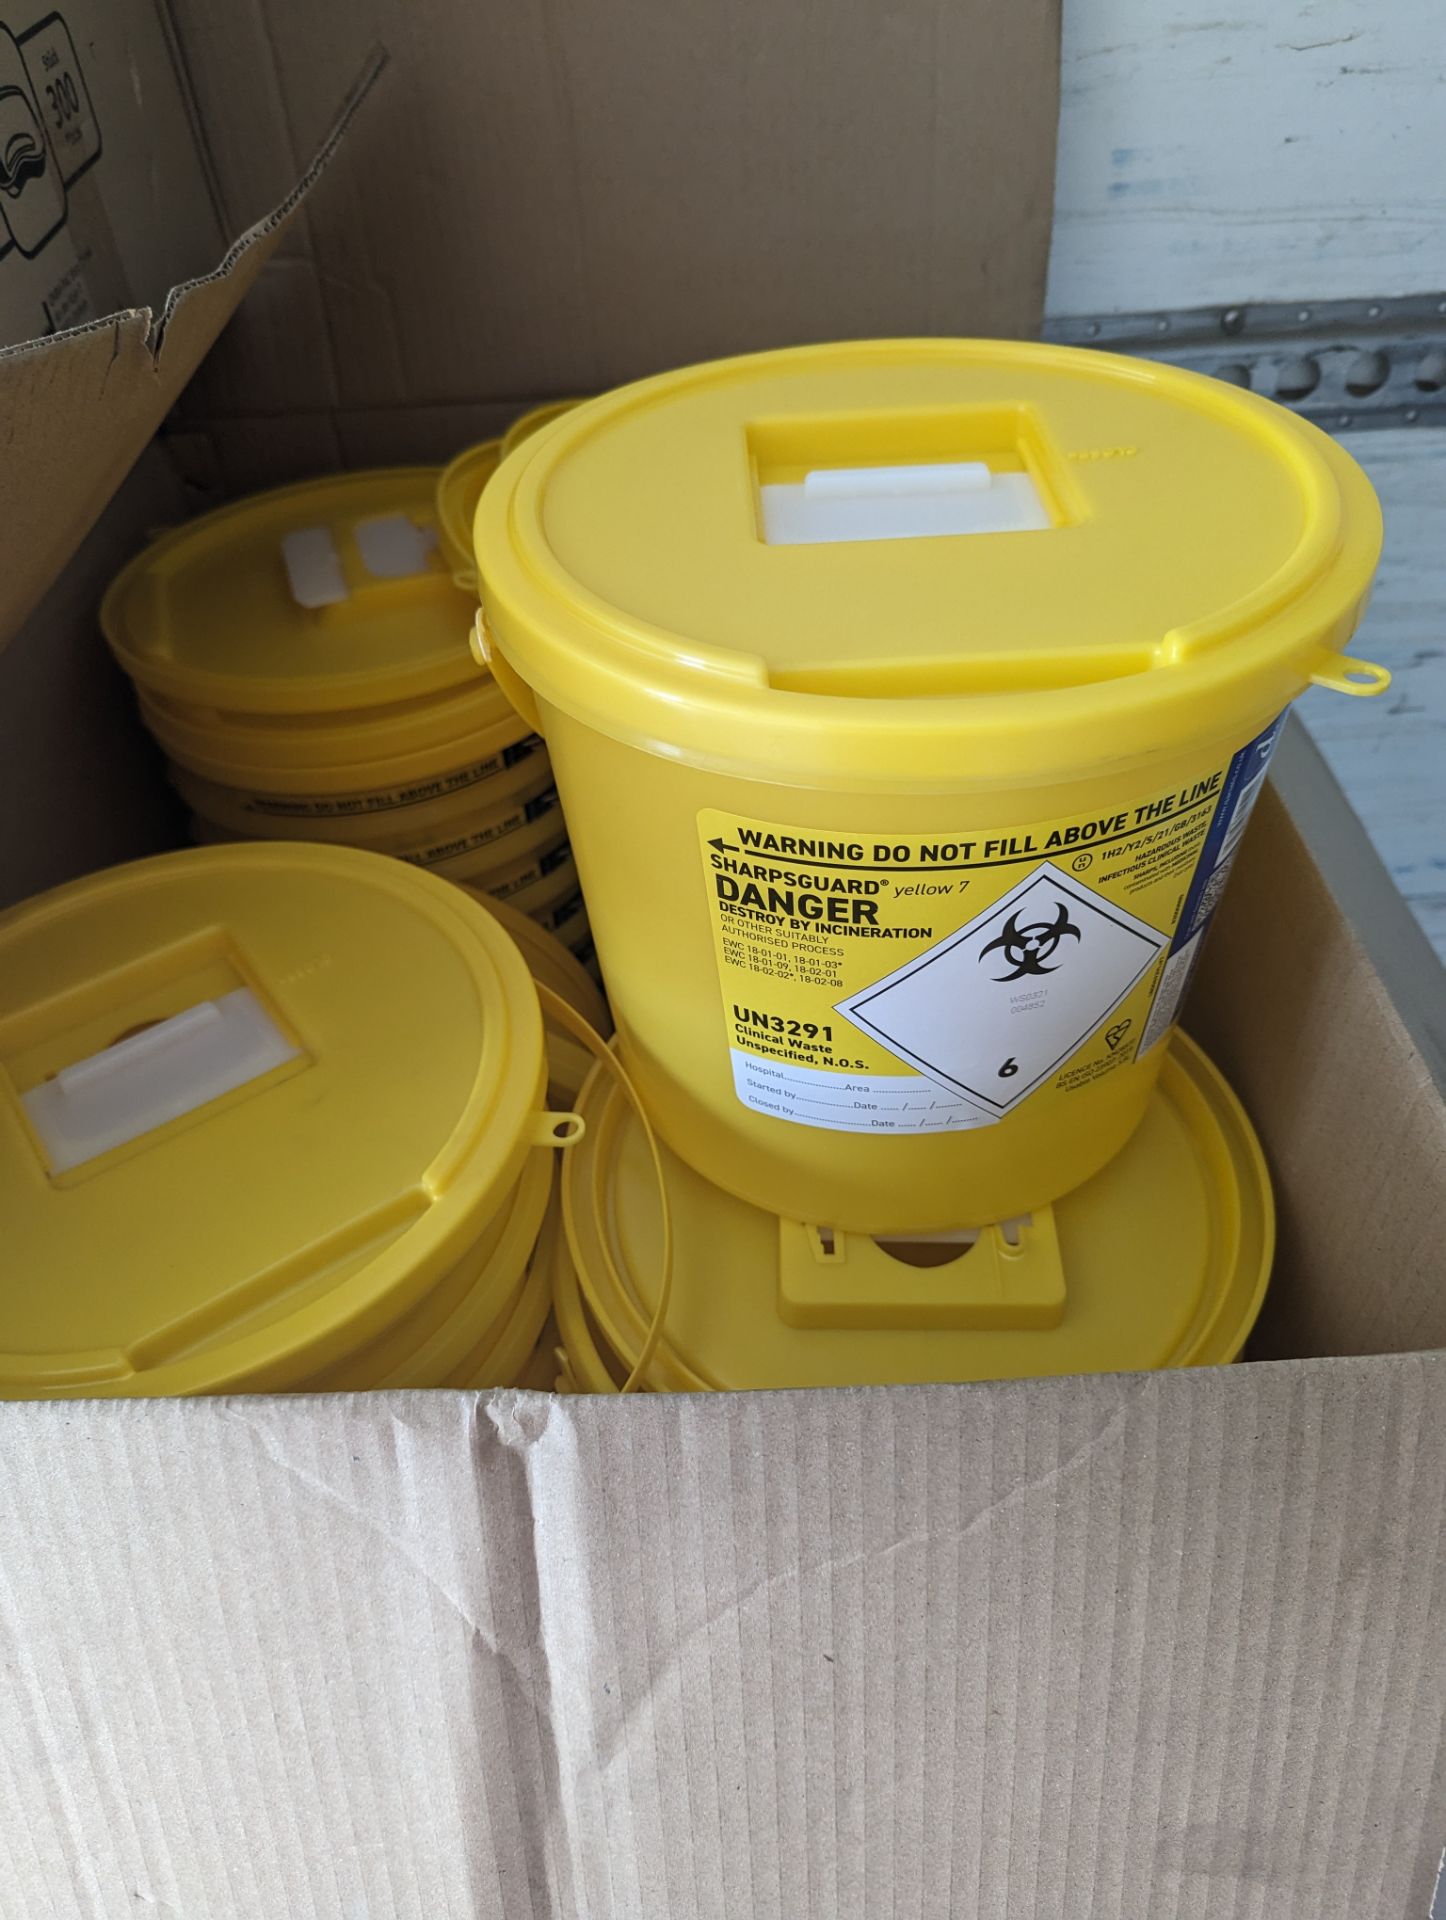 40 x Hazardous Clinical Waste Yellow Bins - Image 2 of 2